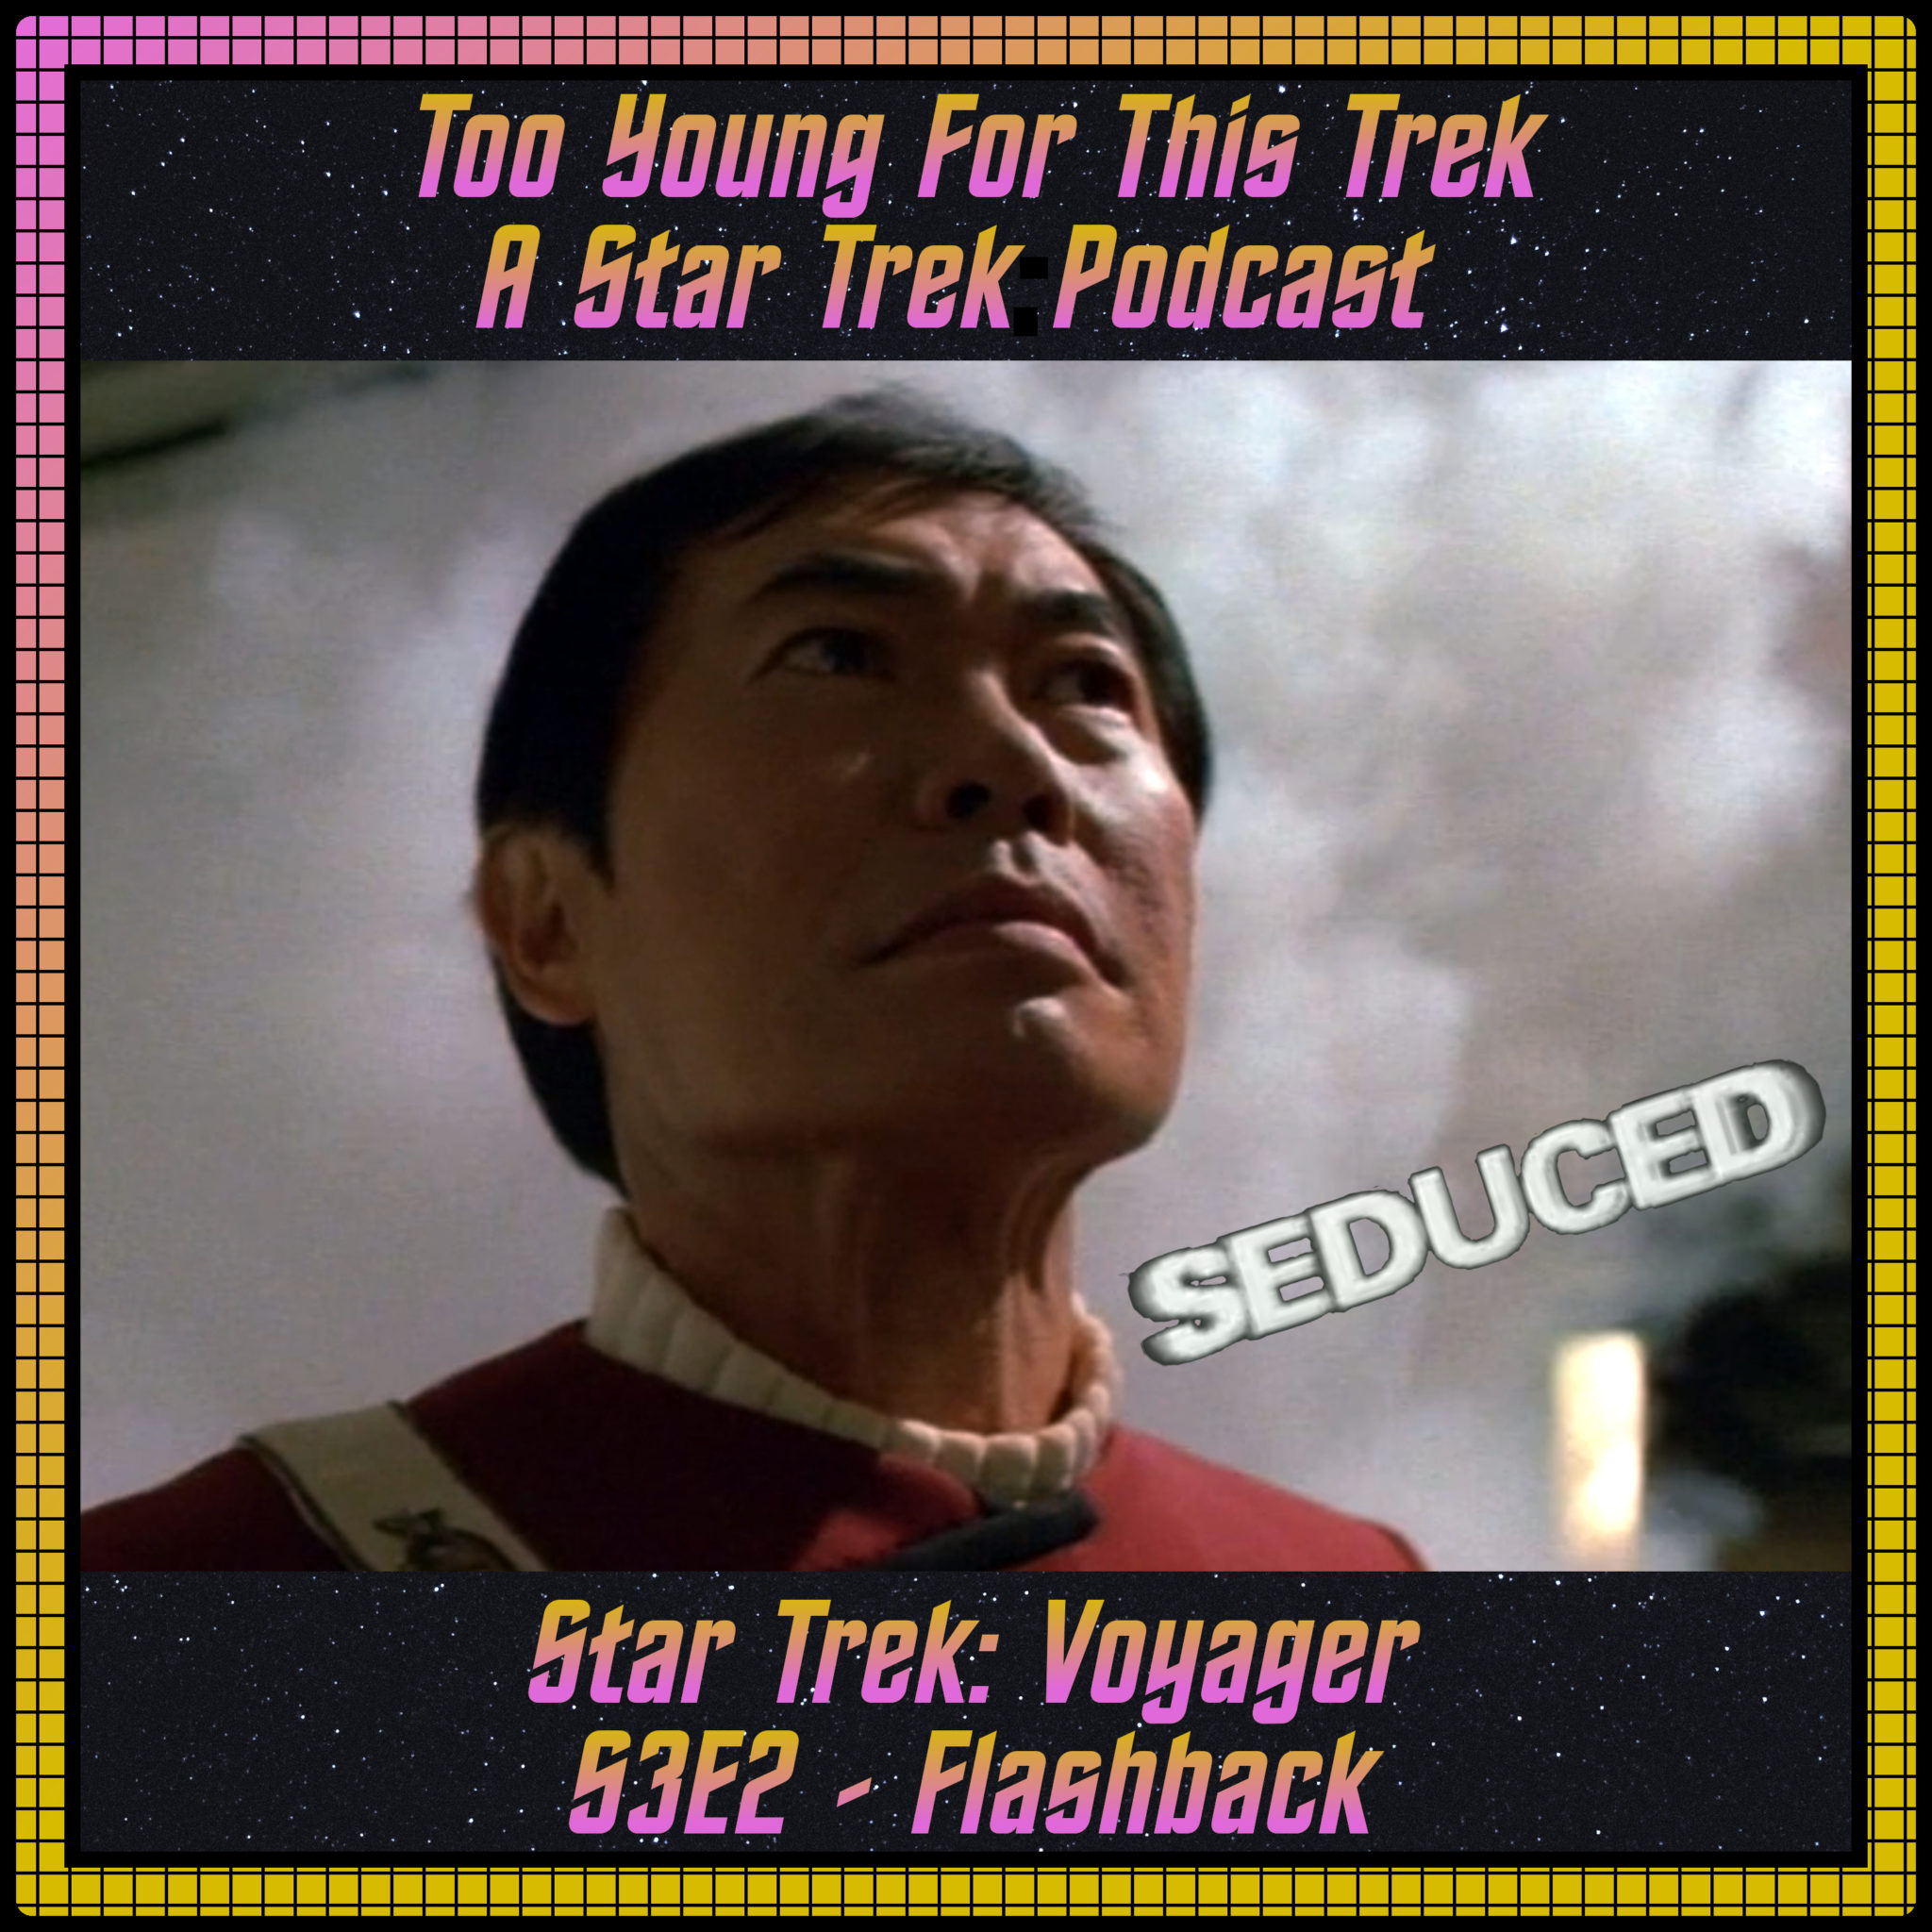 Star Trek: Voyager S3E2 - Flashback